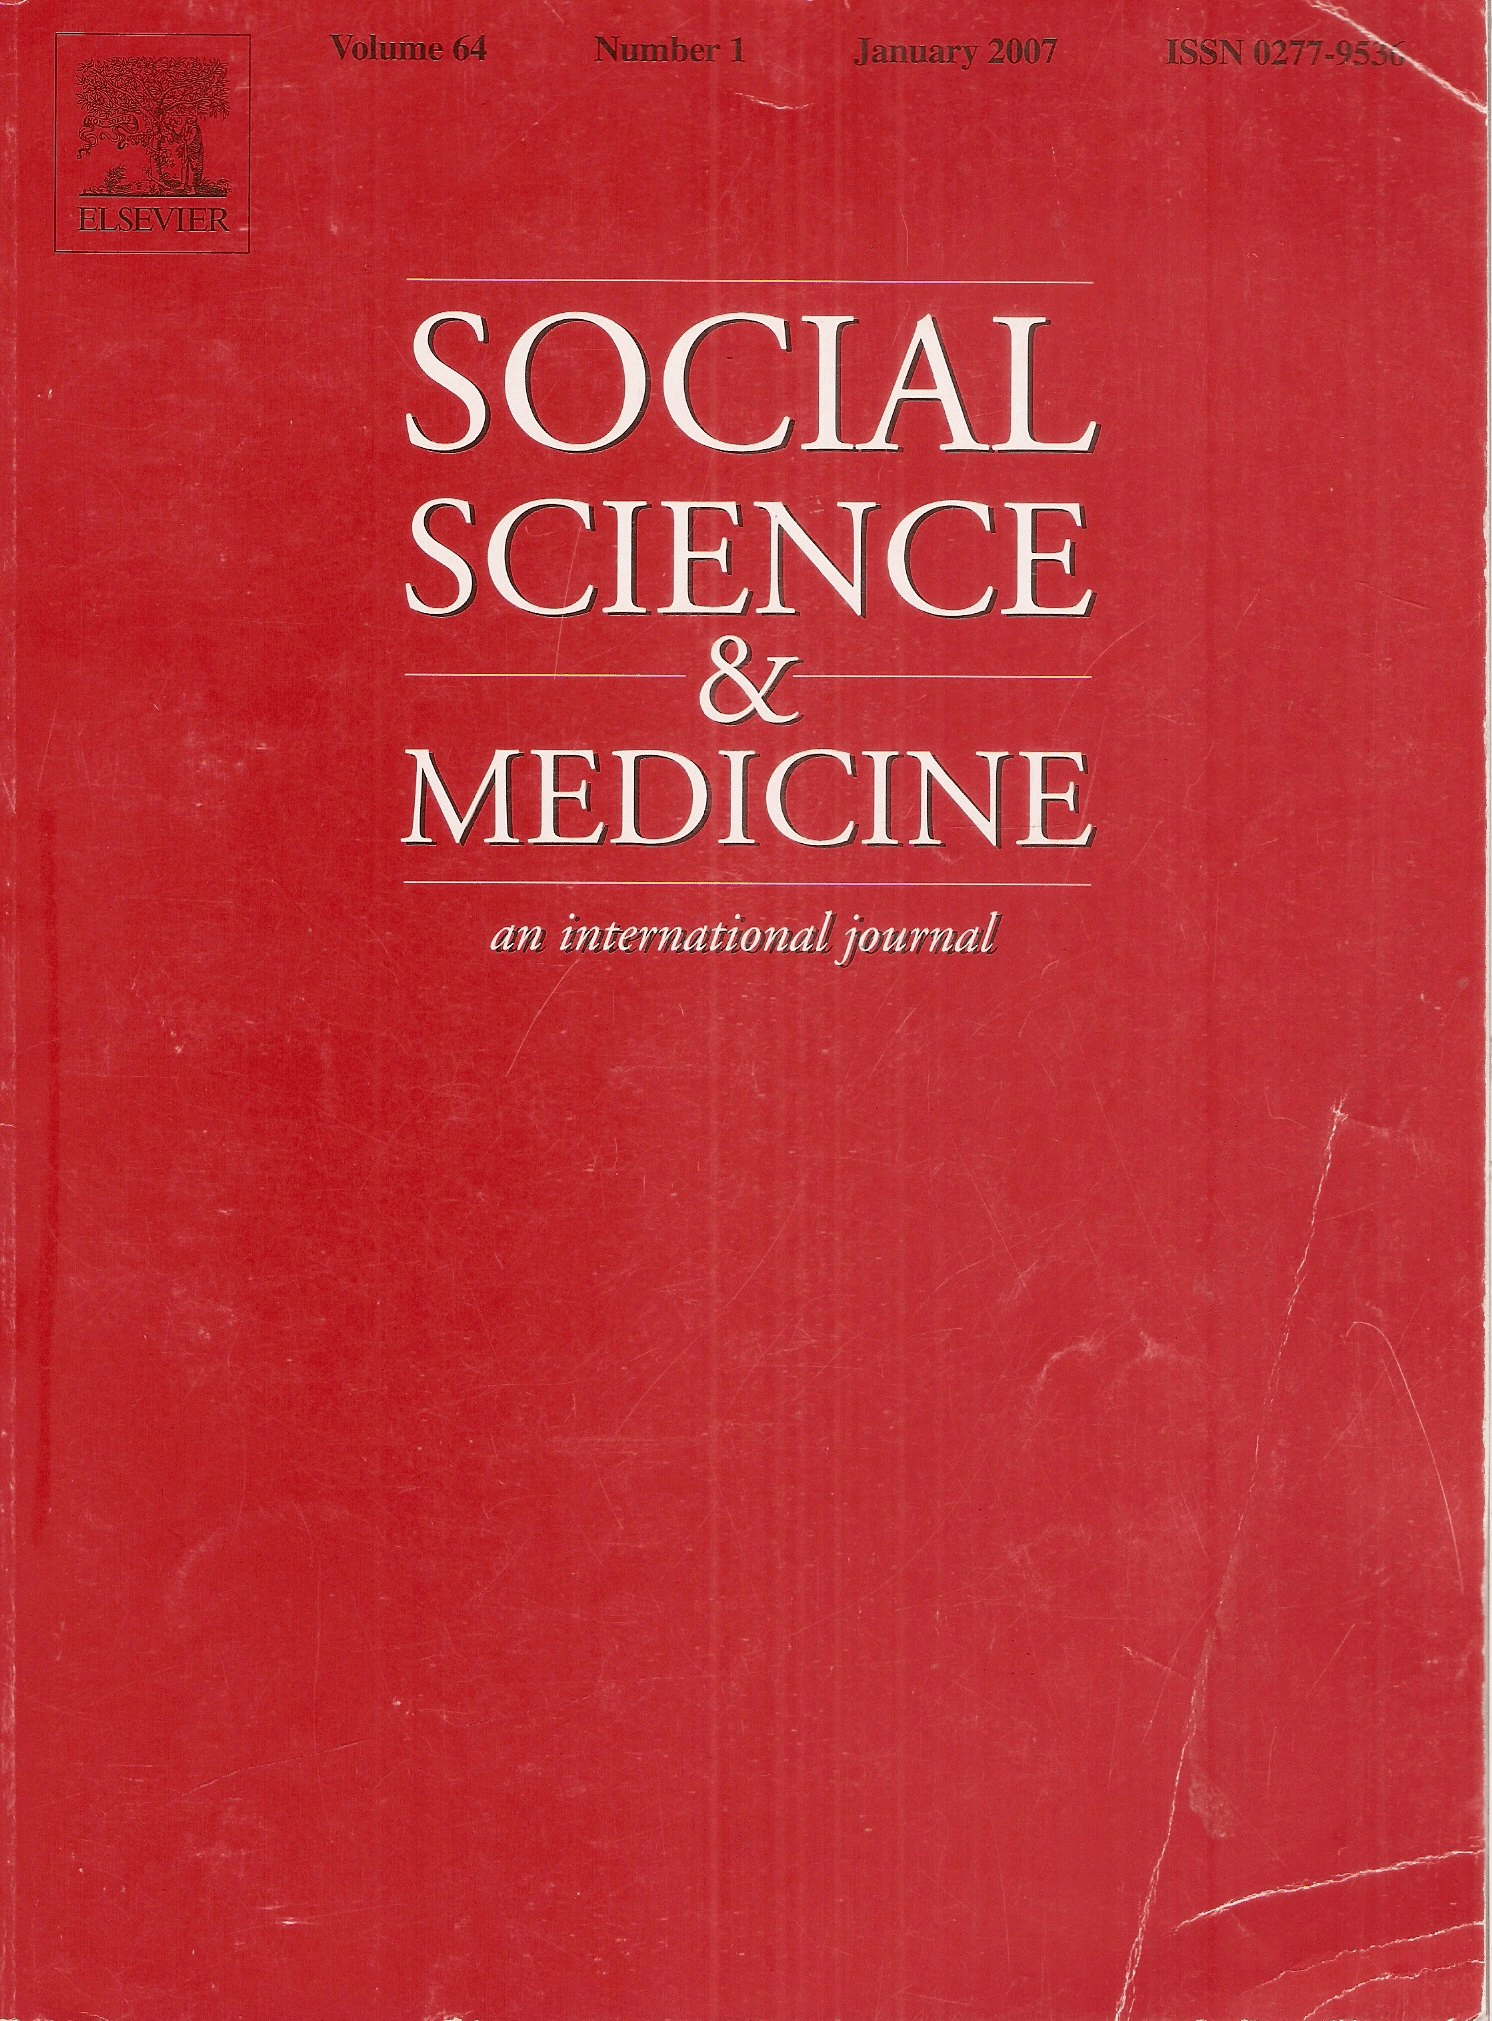 Social Science and Medicine